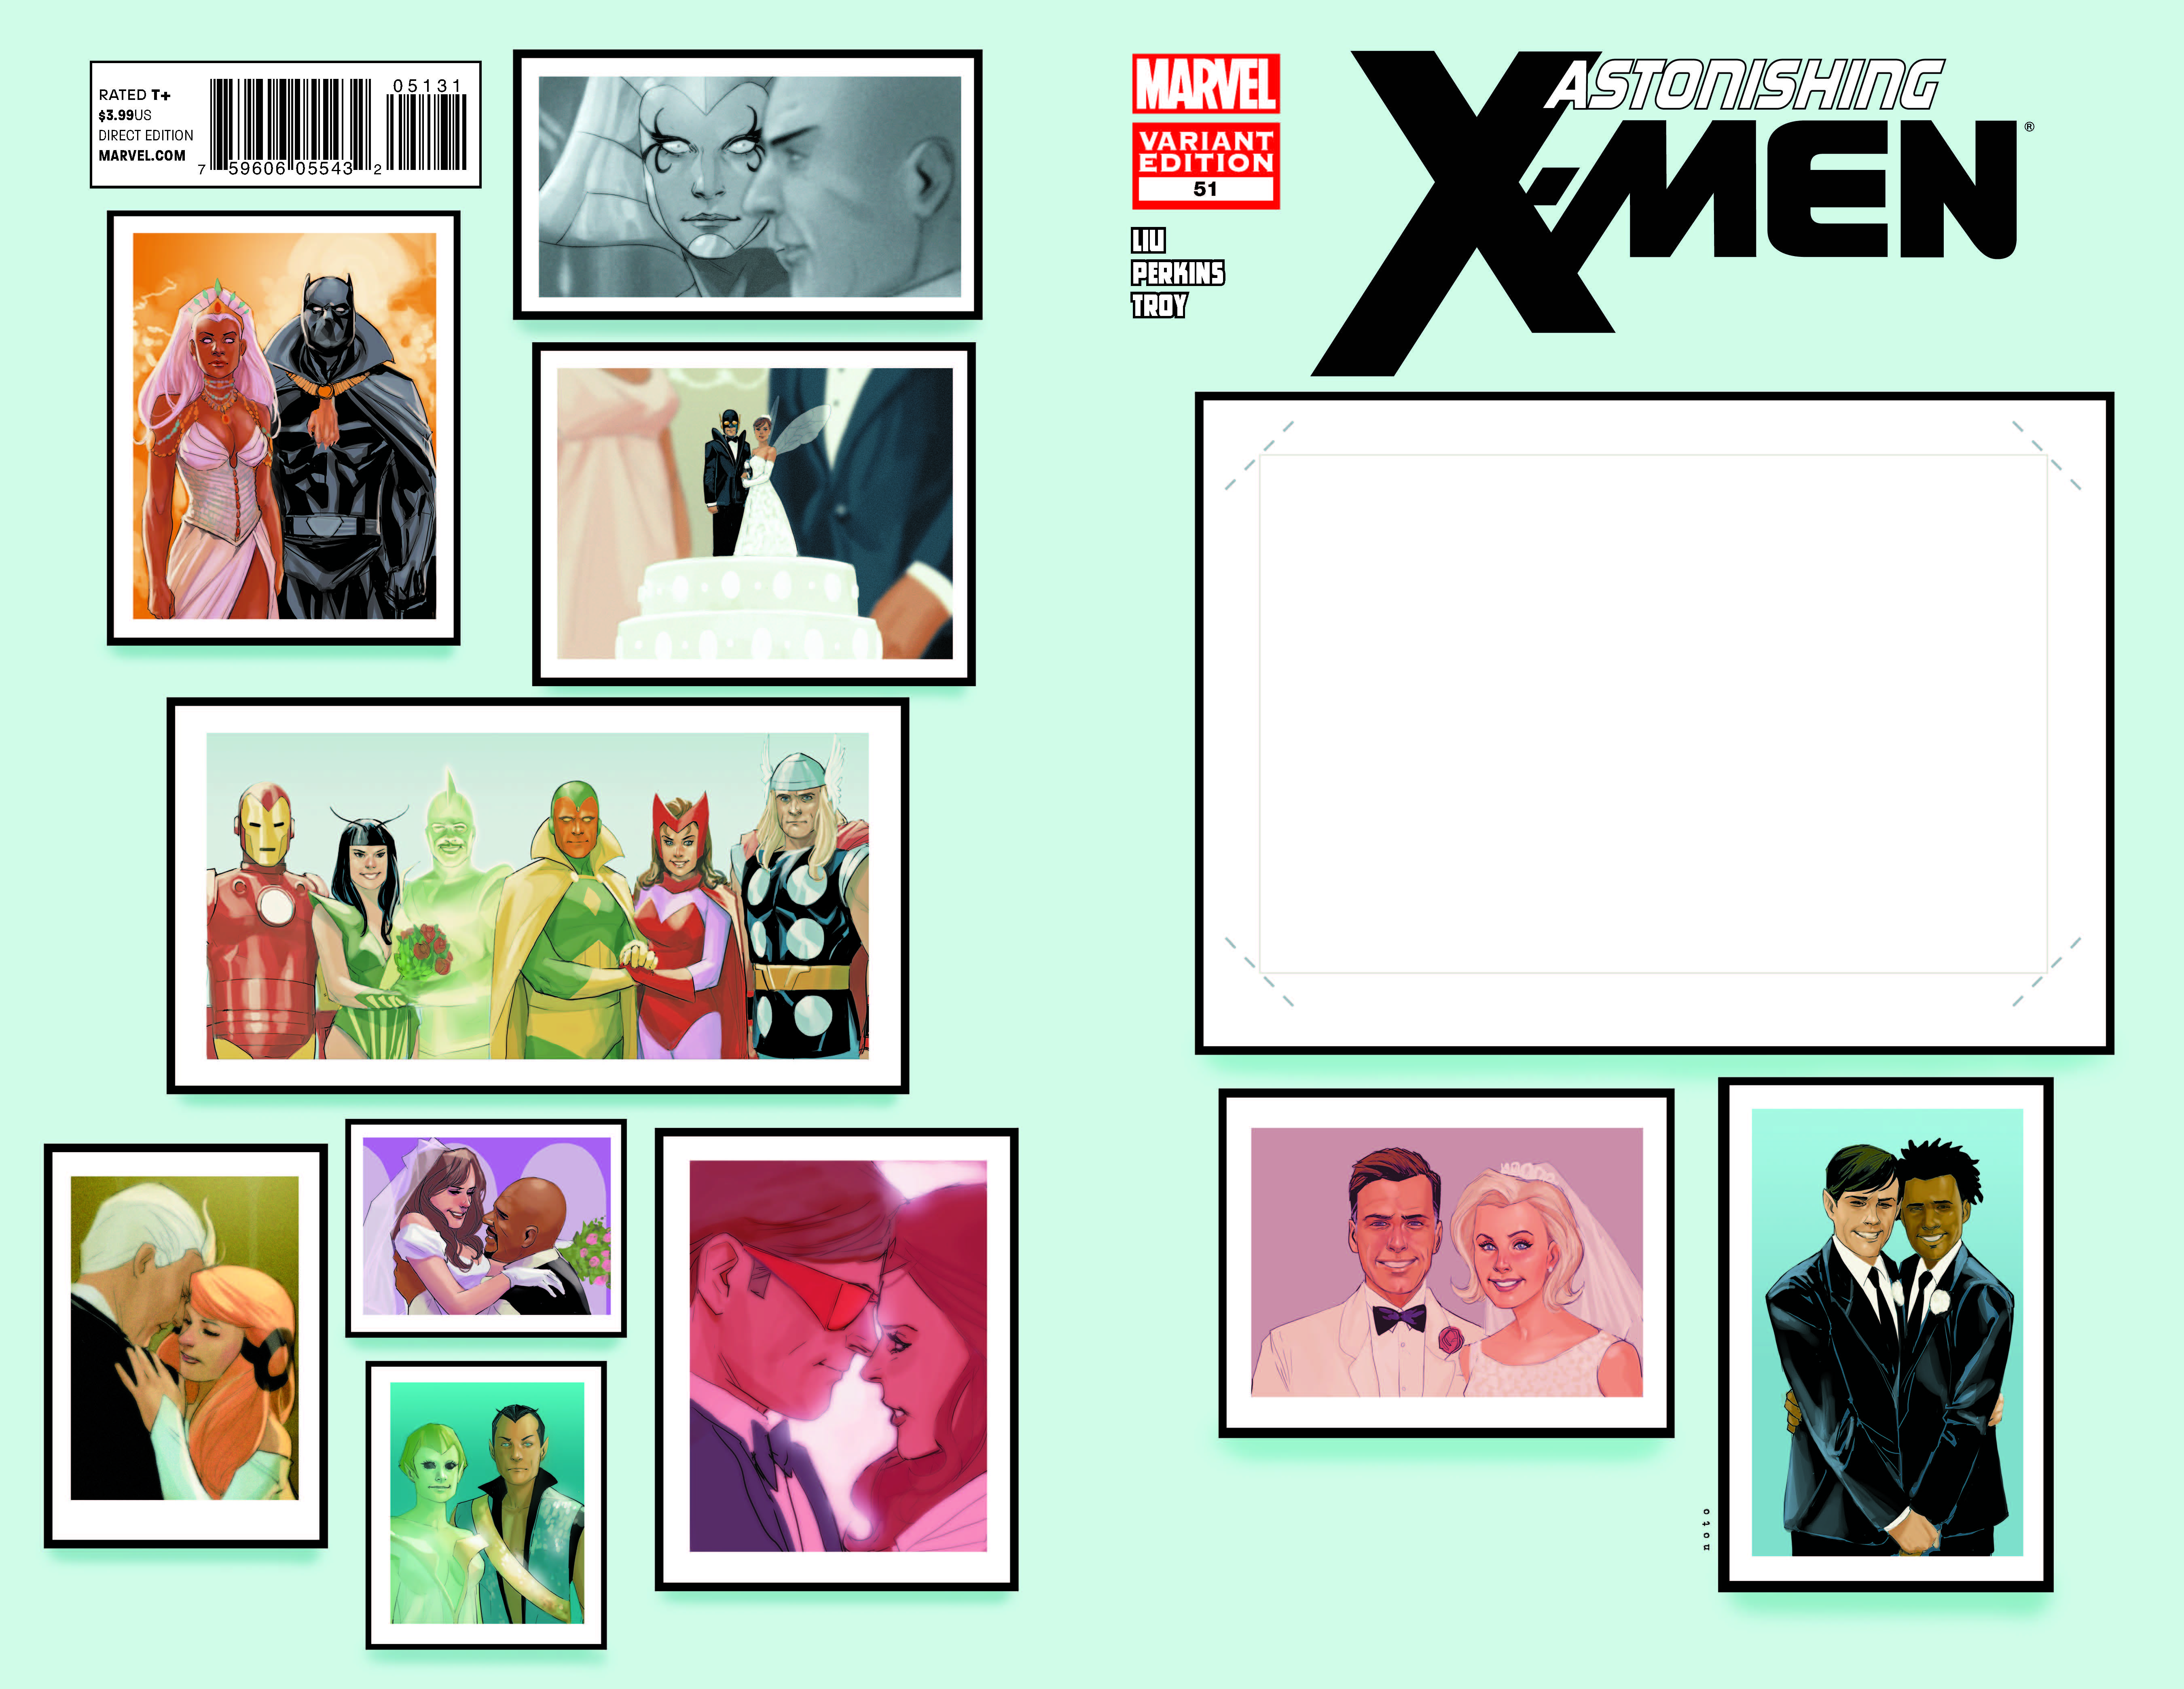 Astonishing X-Men #51 (2004) Create Your Own Wedding Variant